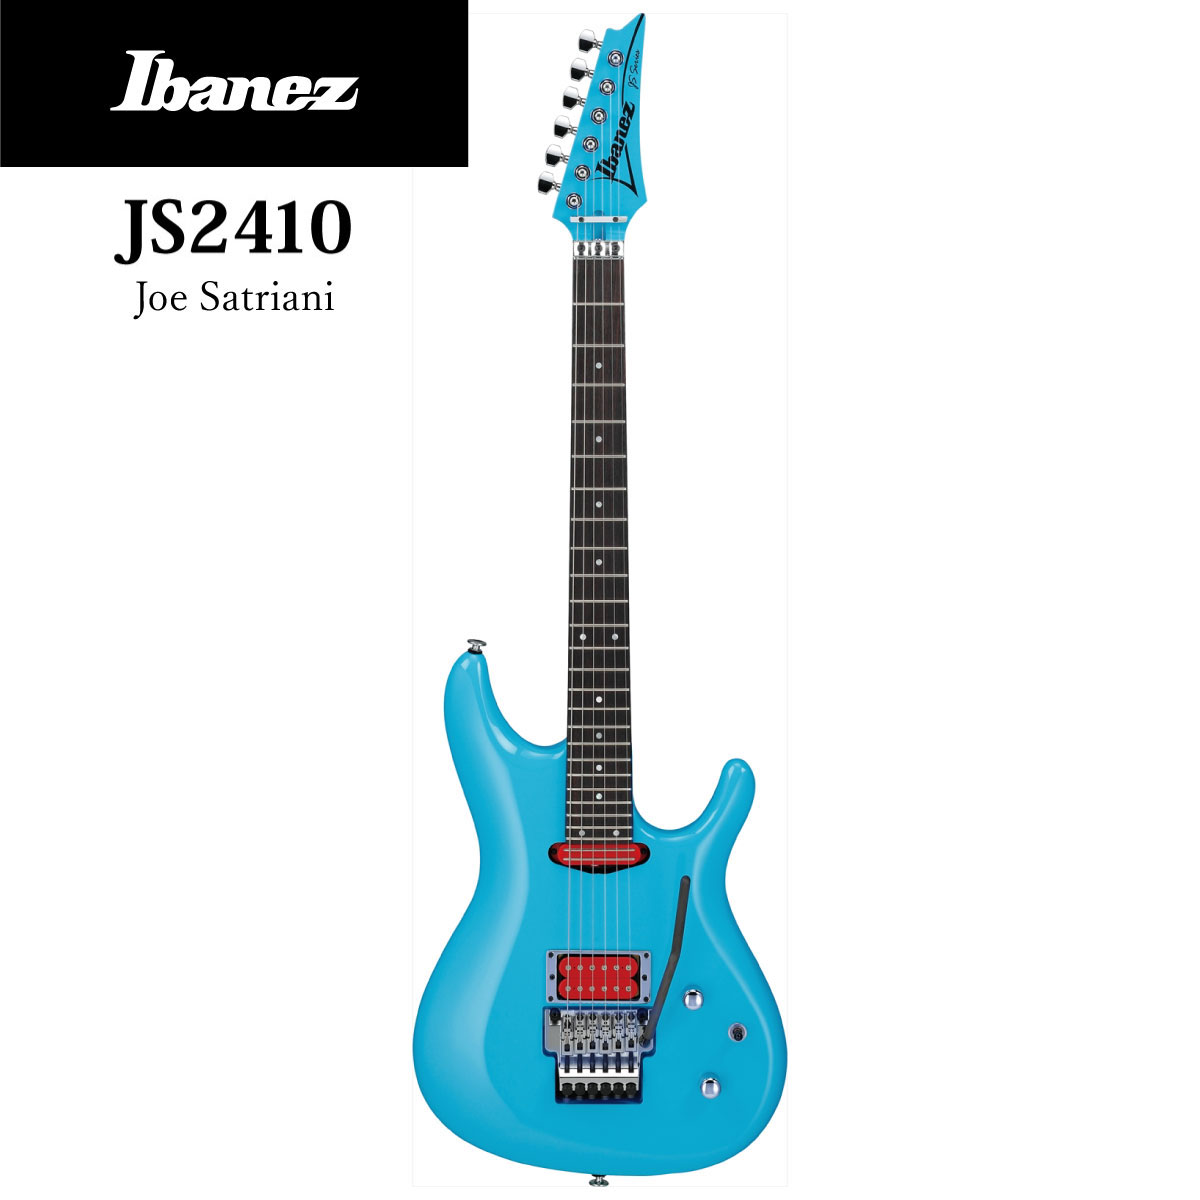 Ibanez JS2410 -SYB (Sky Blue)- 新品 アイバニーズ ブルー,青 Electric Guitar,エレキギター Joe Satriani,ジョー サトリアーニ